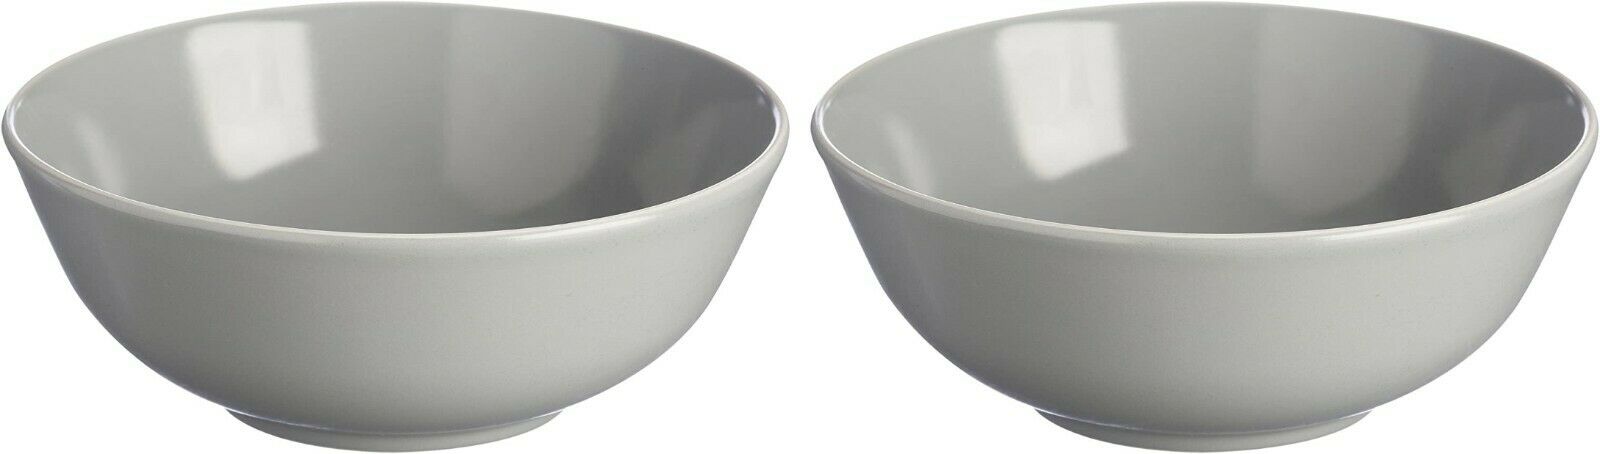 Set of 2 Mason Cash Stoneware Bowls Classic Collections 17cm Cereal Soup Bowls